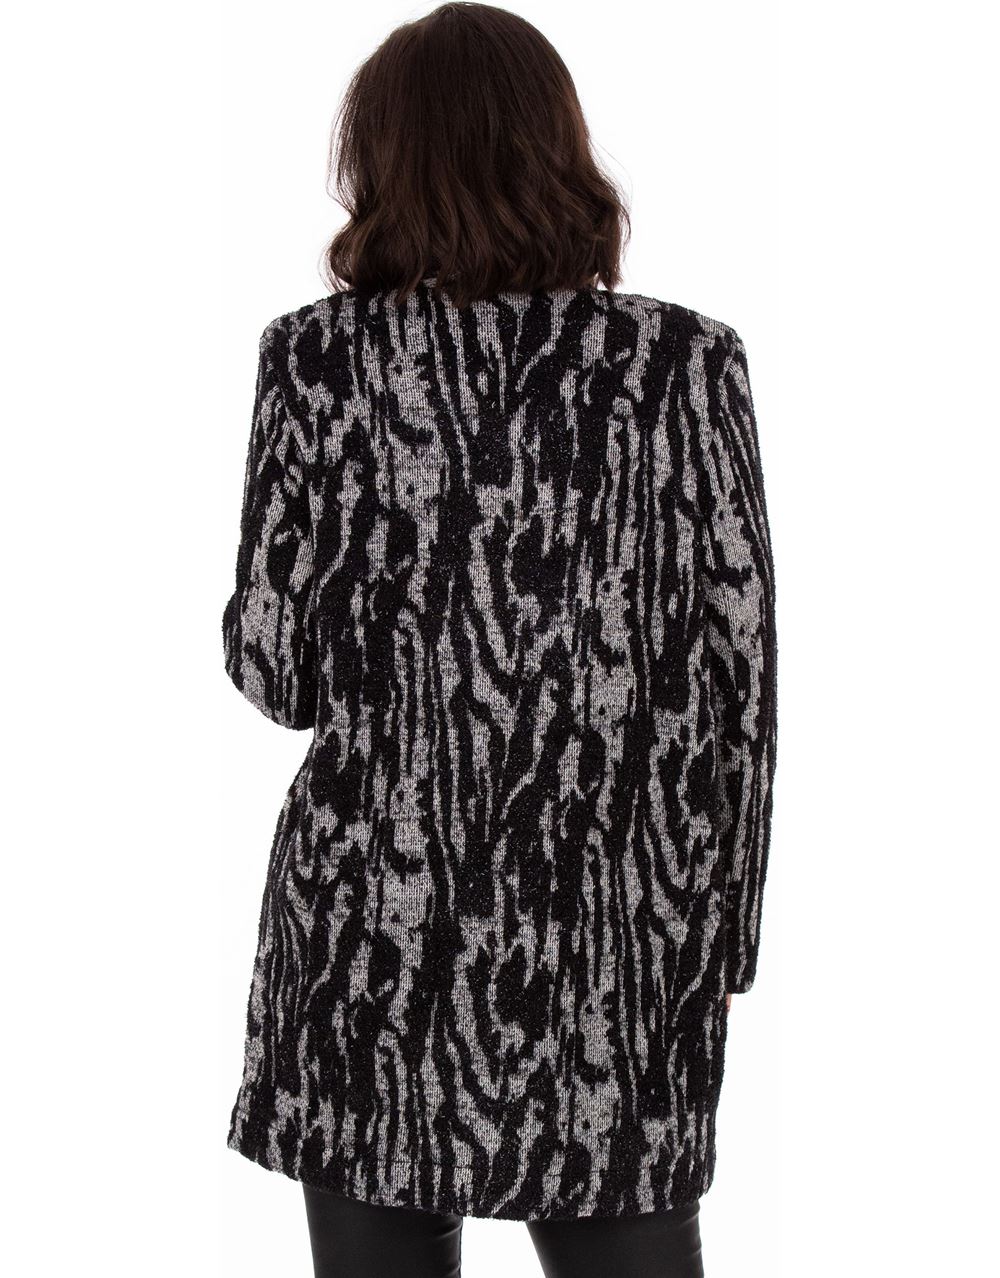 Zebra Print Knitted Jacket